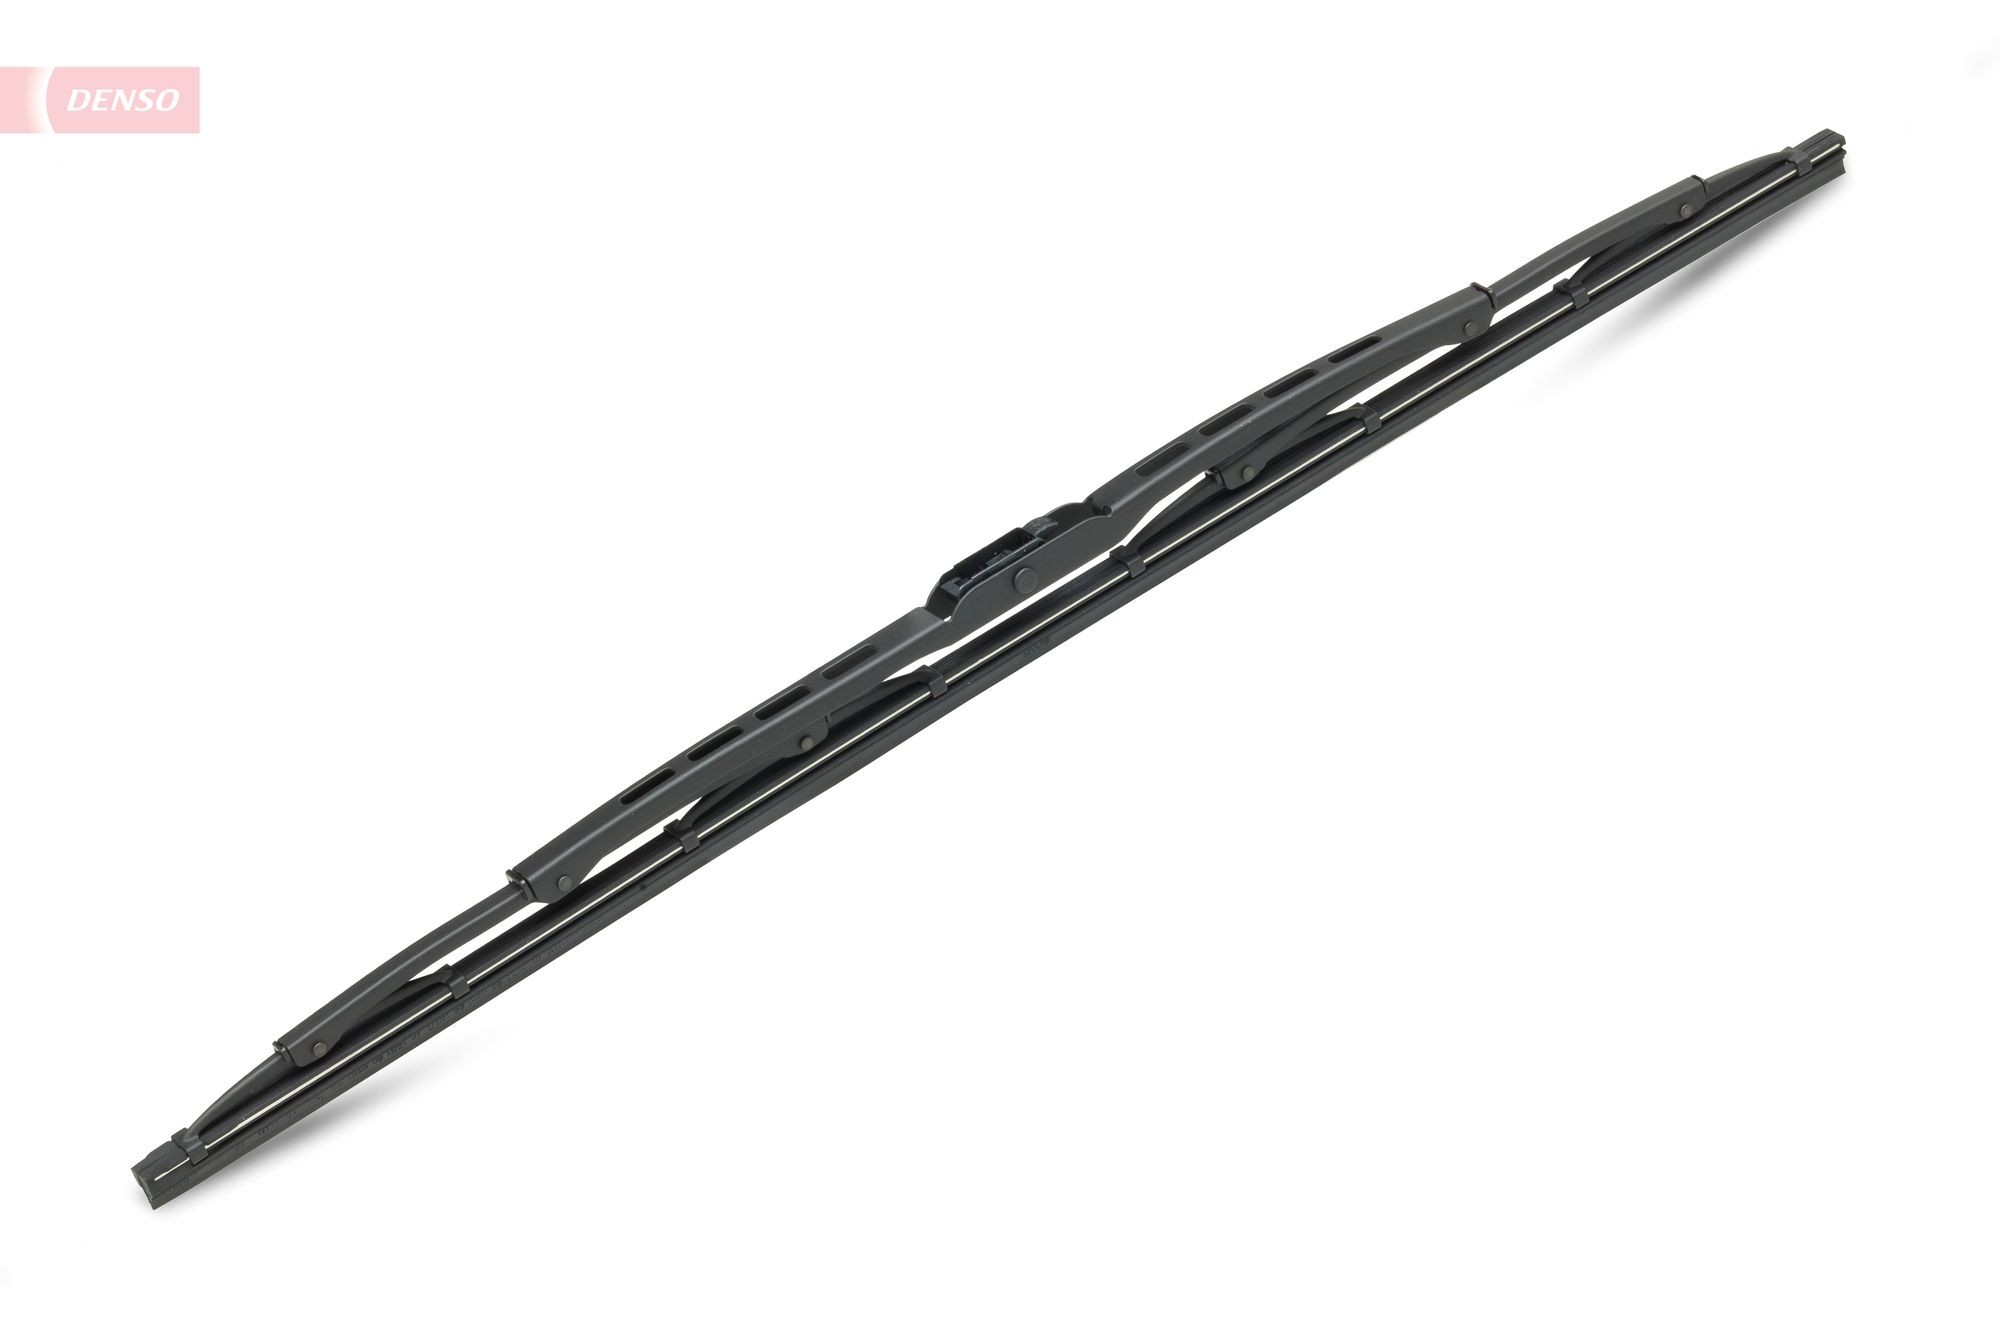 DENSO Standard DM-055 Wiper blade 550 mm, Standard, 22 Inch